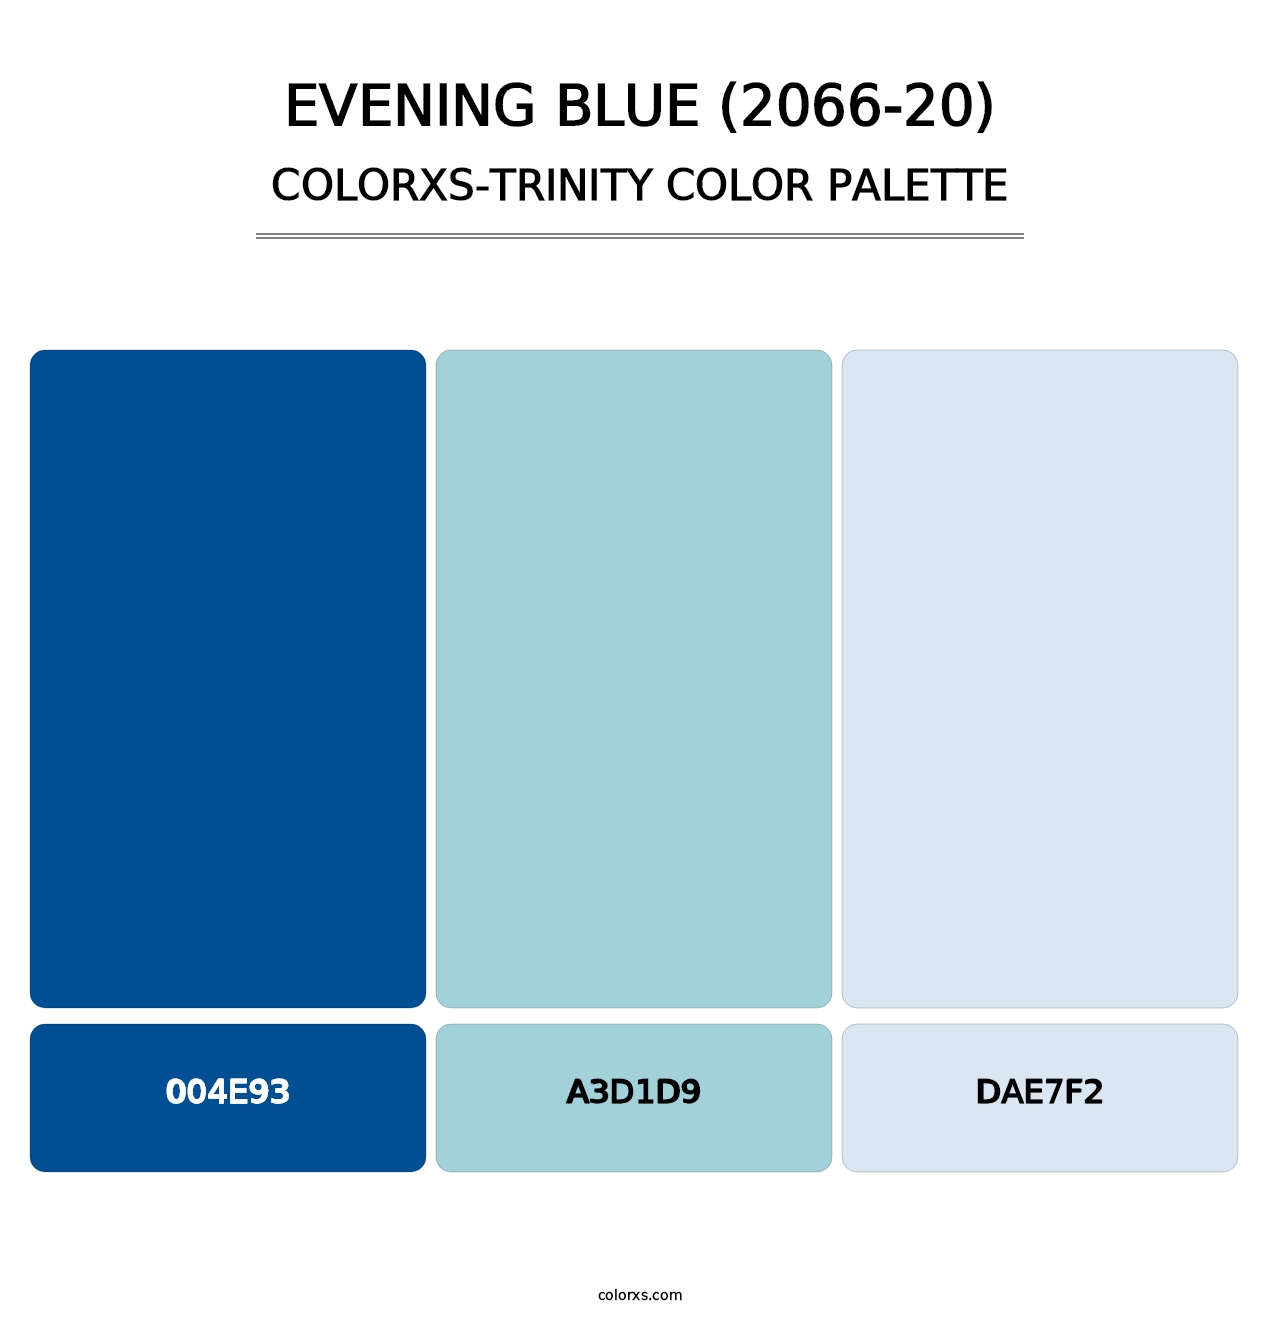 Evening Blue (2066-20) - Colorxs Trinity Palette